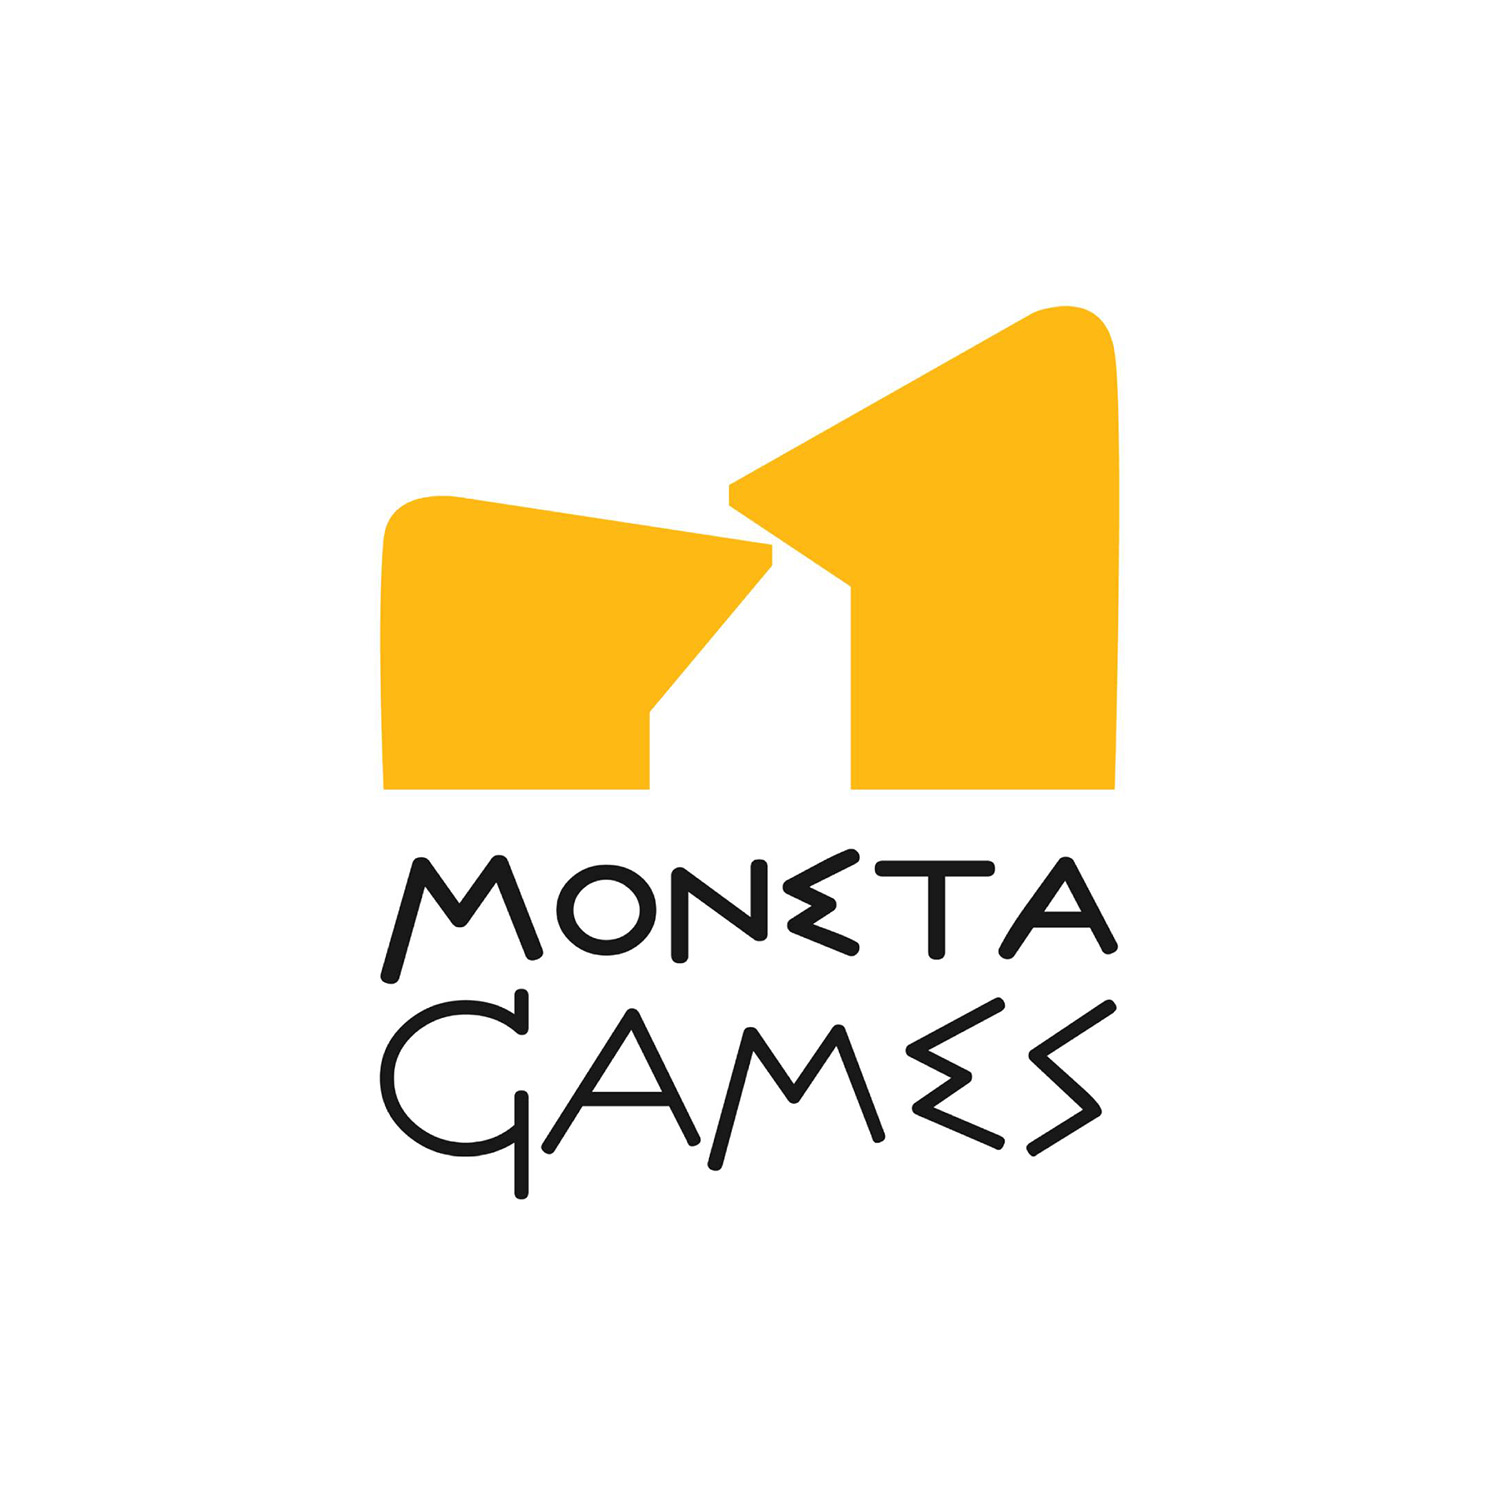 Moneta Games